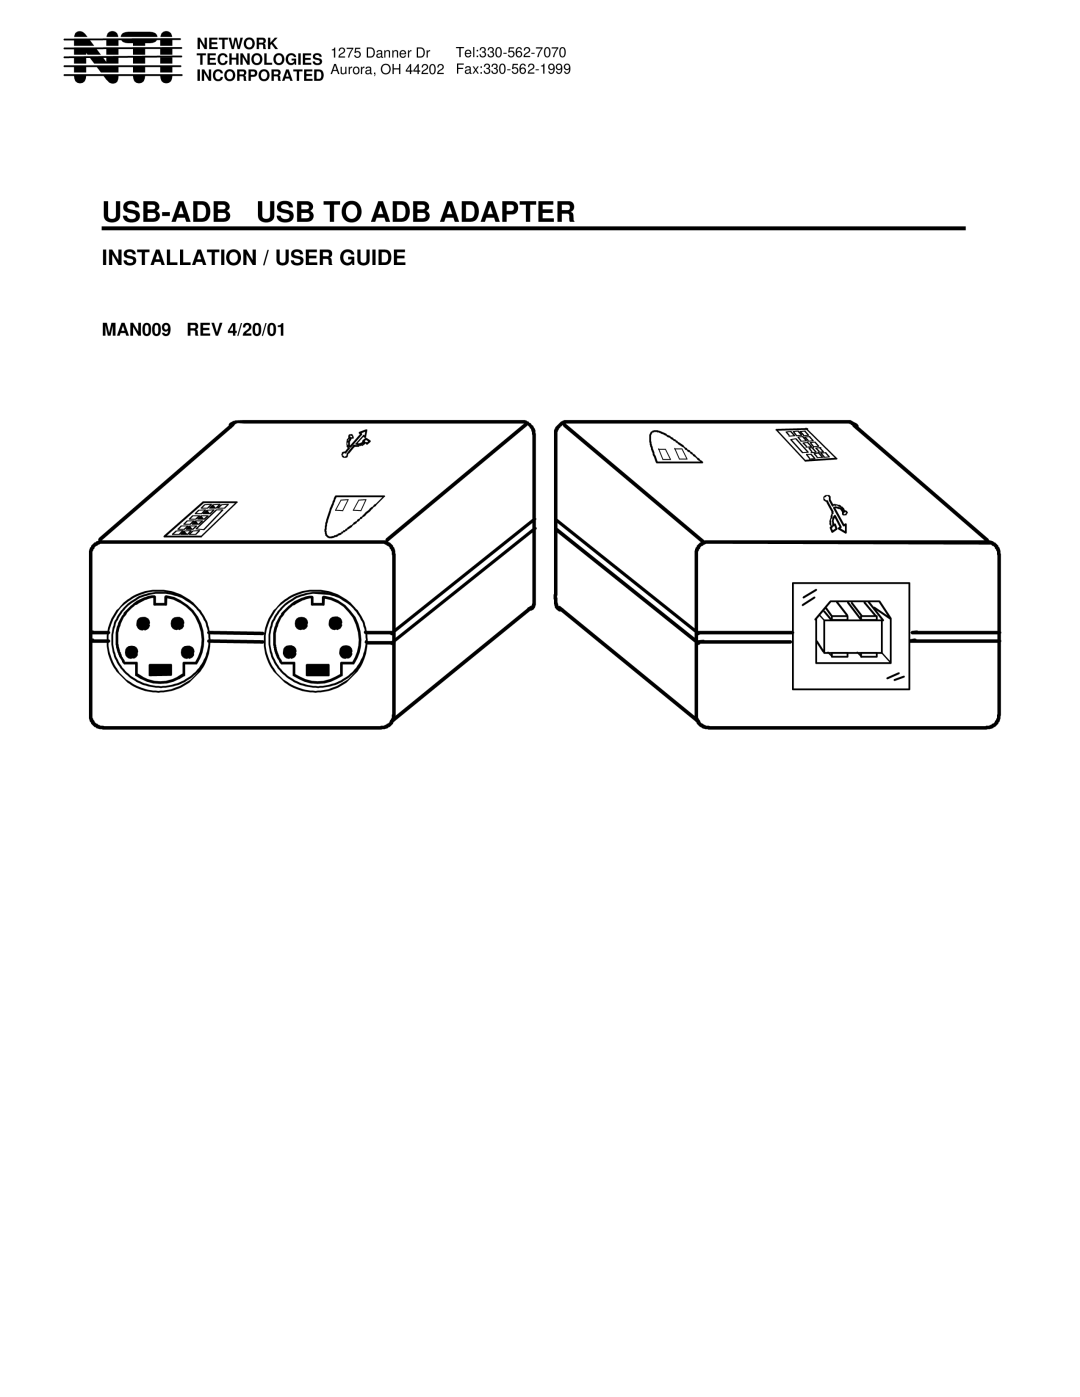 Network Technologies manual Installation / User Guide, Usb-Adb Usb To Adb Adapter, Danner Dr, Tel330-562-7070 